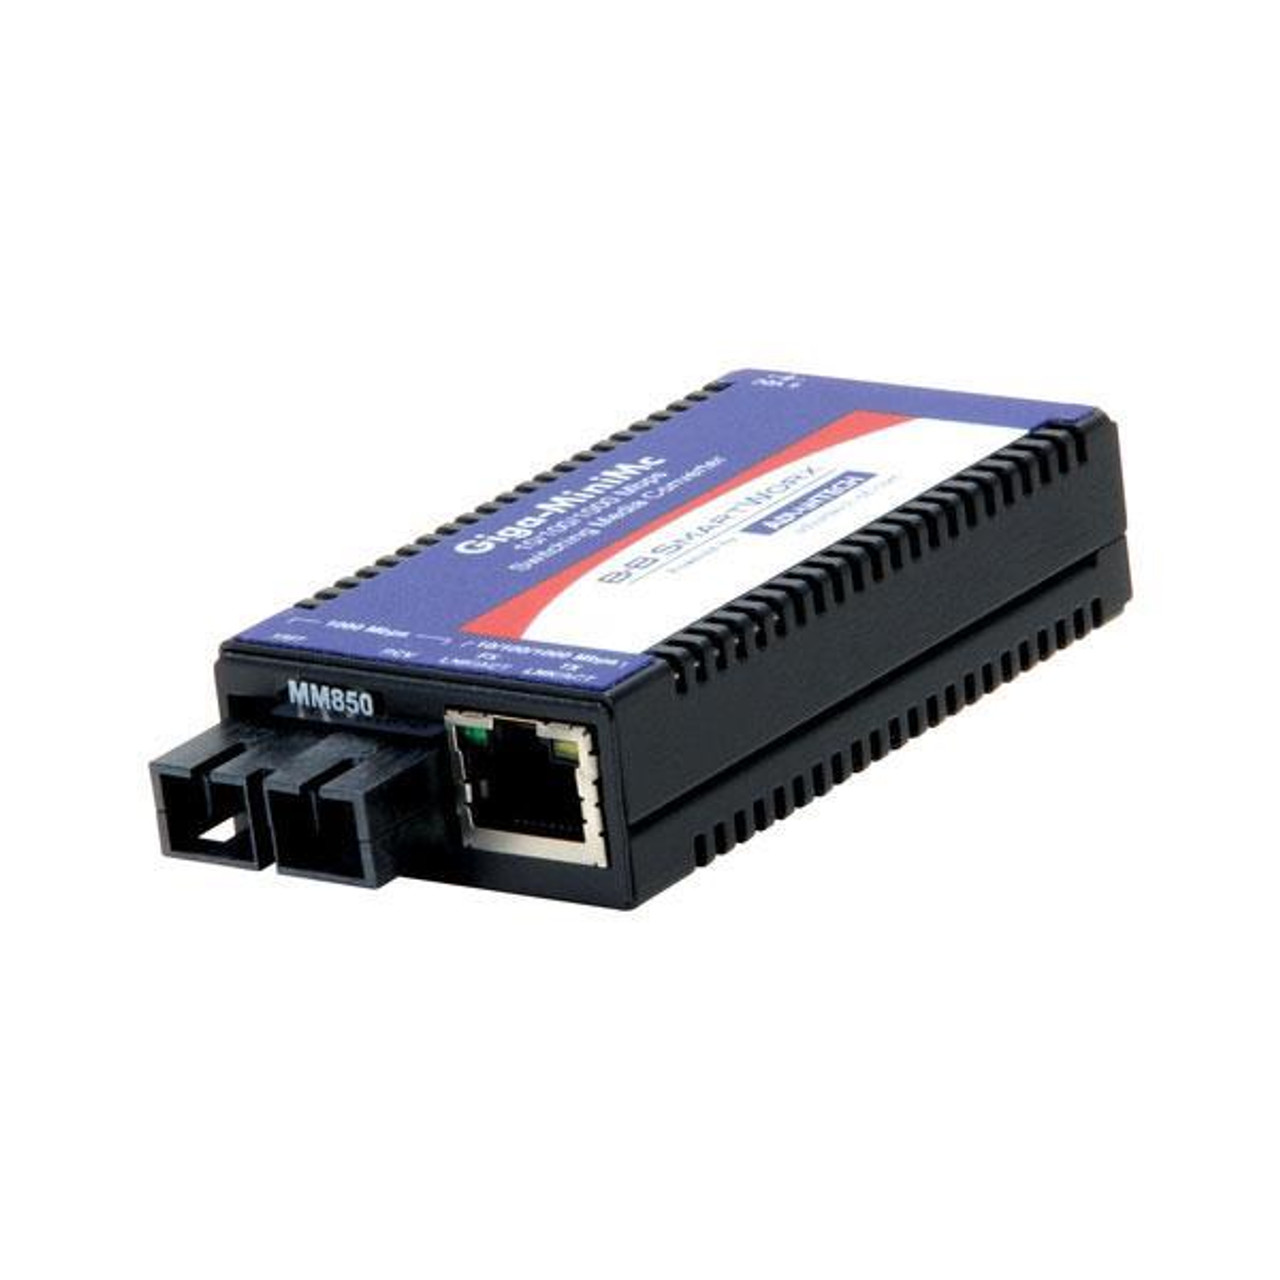 Advantech 10/100/1000Mbps Miniature 1x Network RJ-45 1x ST Ports DuplexST Port Multi-mode Gigabit Ethernet 10/100/1000Base-TX 1000Base-SX DIN Rail